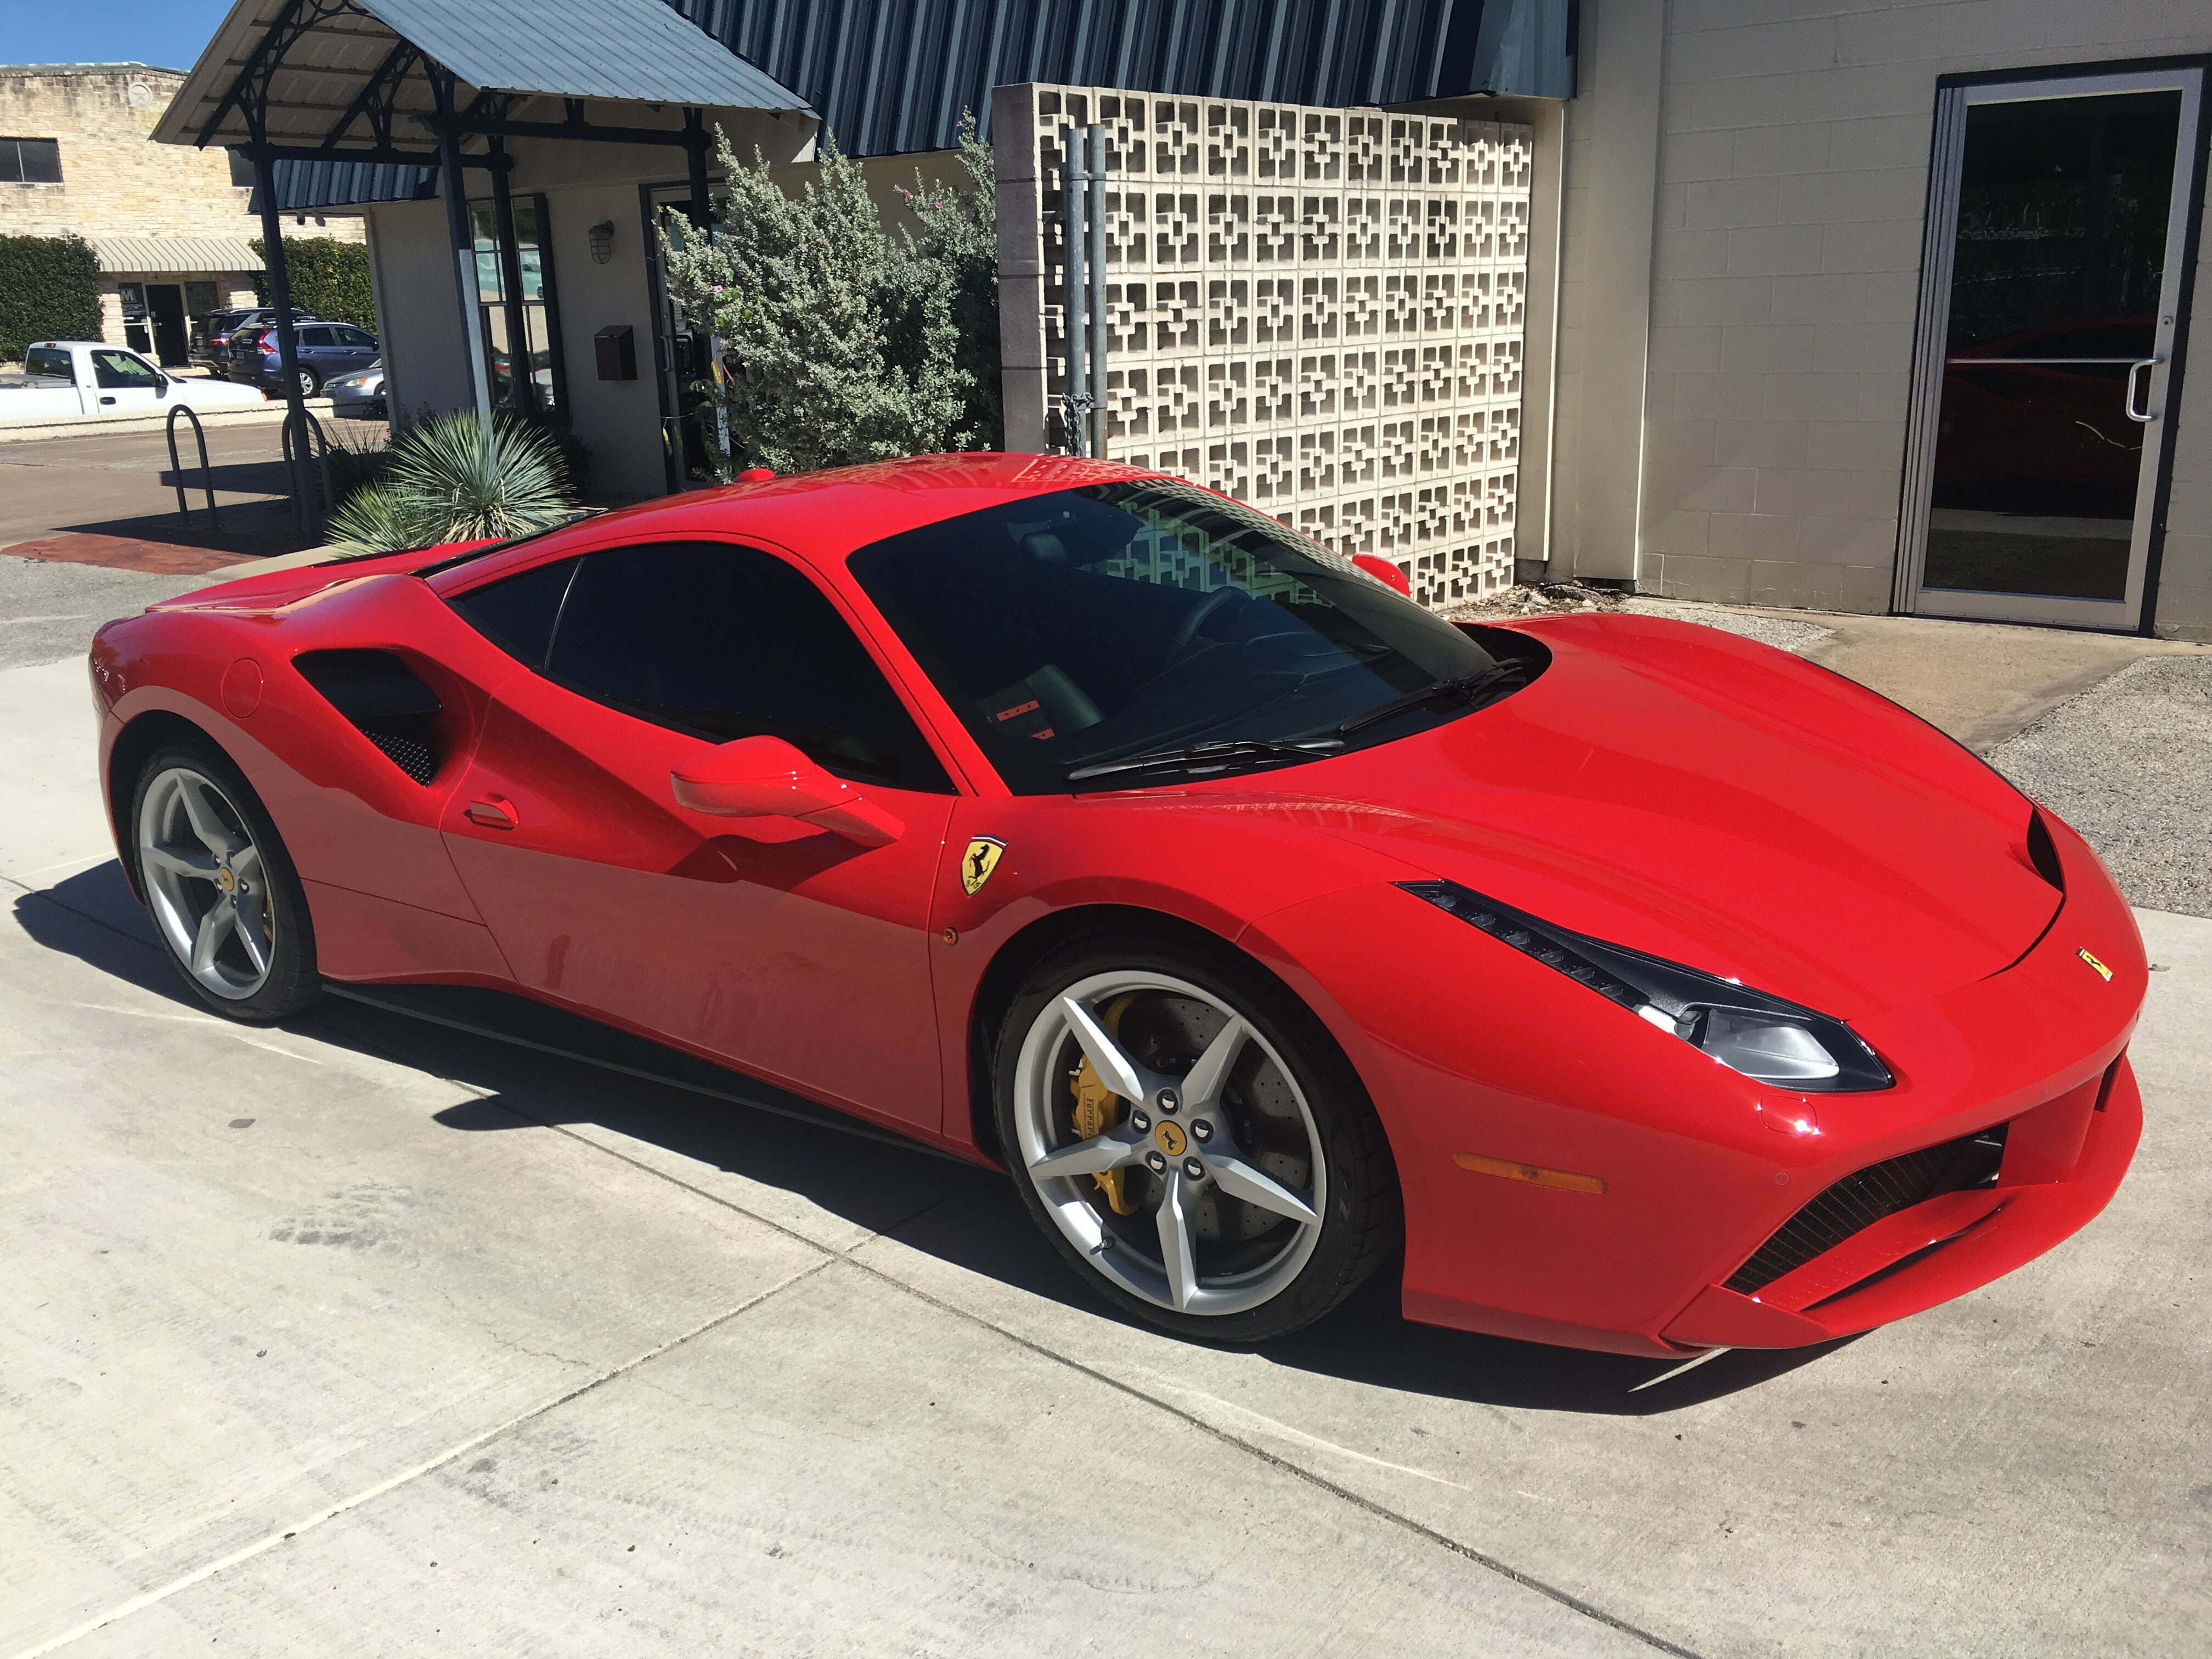 Red Ferrari at Sunbusters in Austin Tx